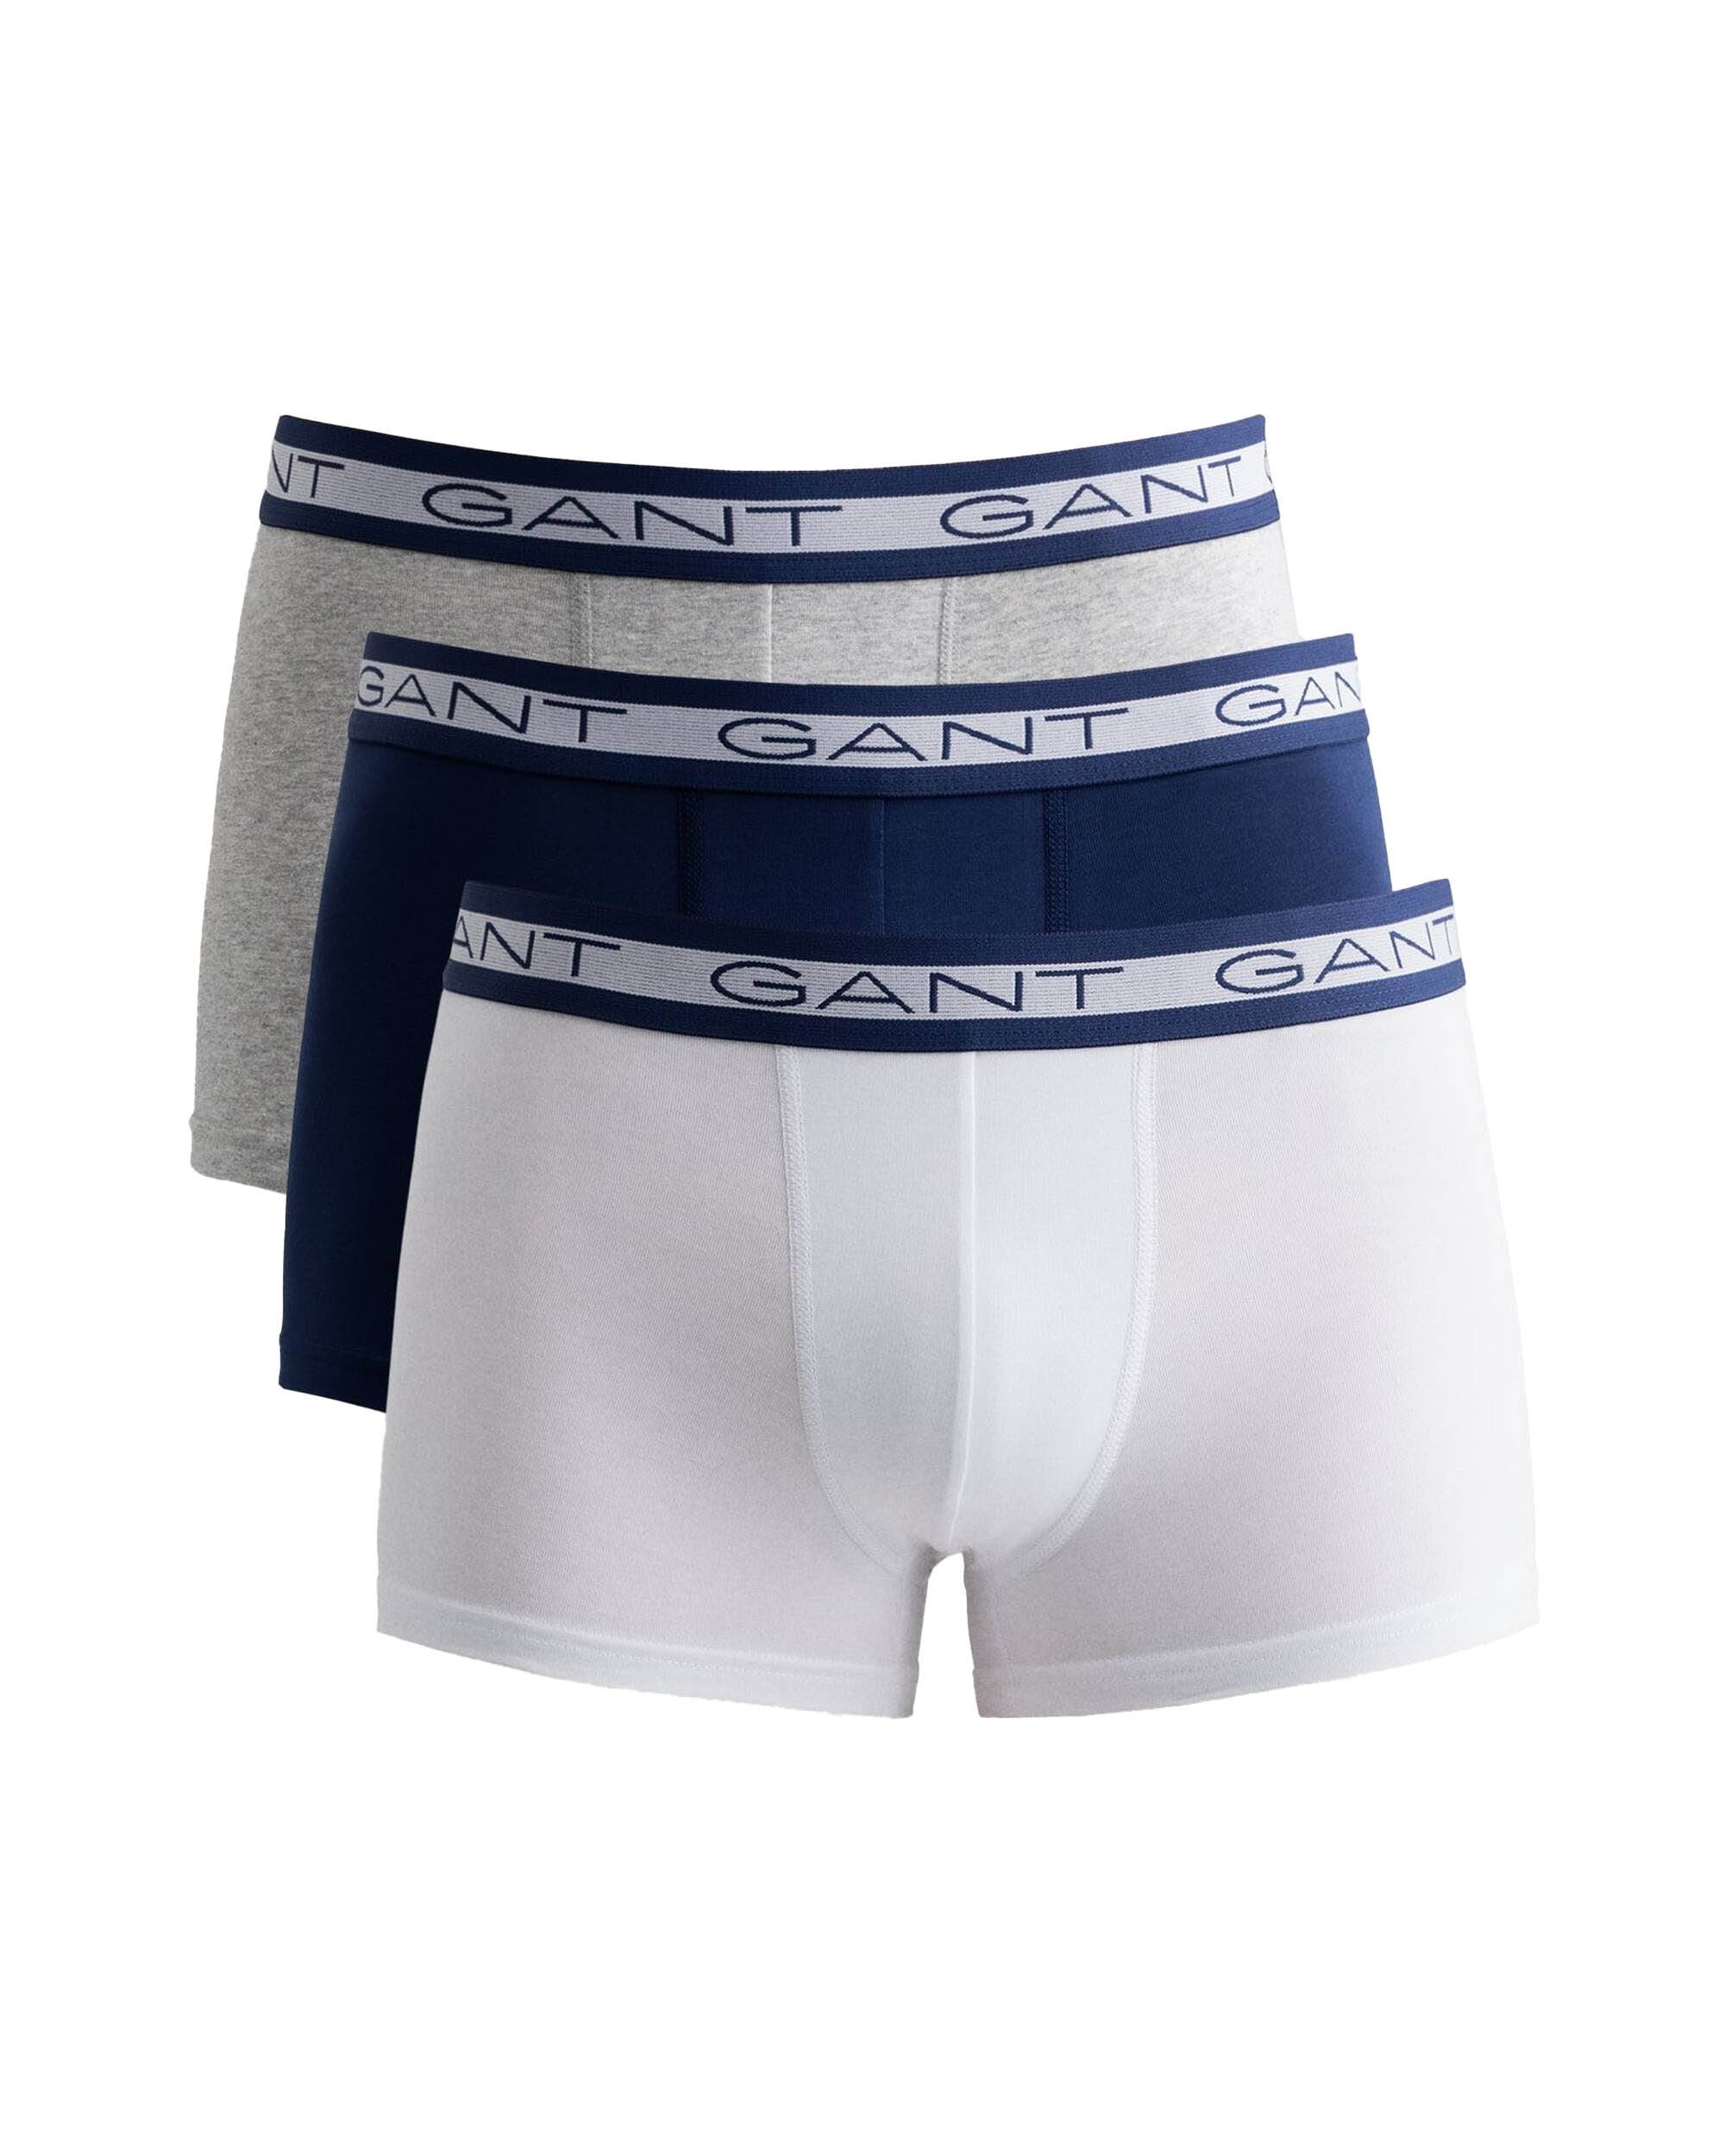 Pack Trunks, Boxer 3er Boxer Weiß/Blau/Grau Shorts, Herren - Cotton Gant